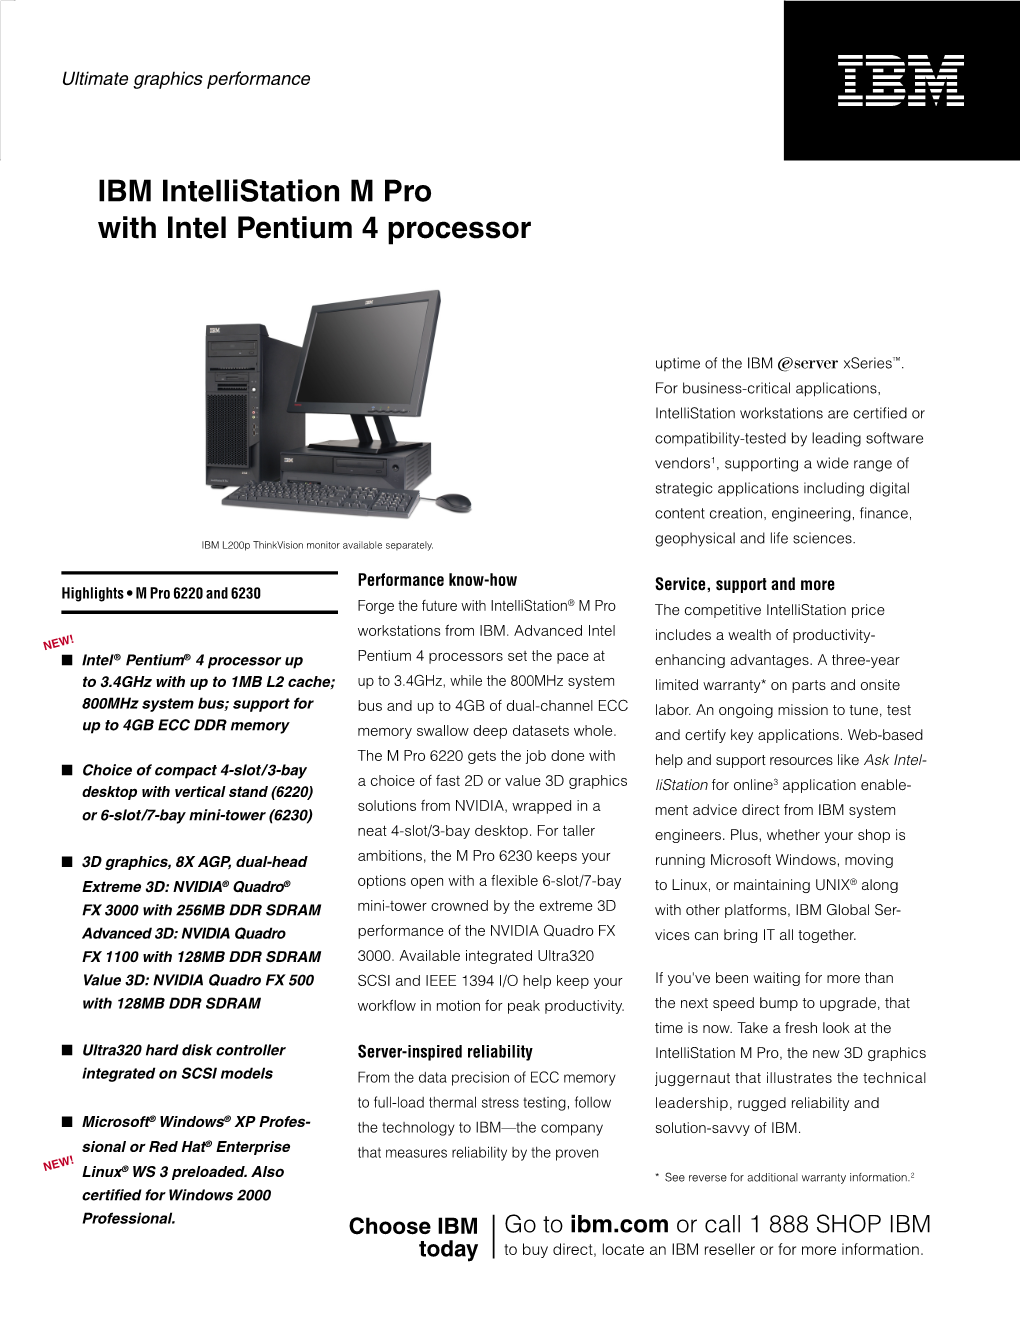 IBM Intellistation M Pro with Intel Pentium 4 Processor